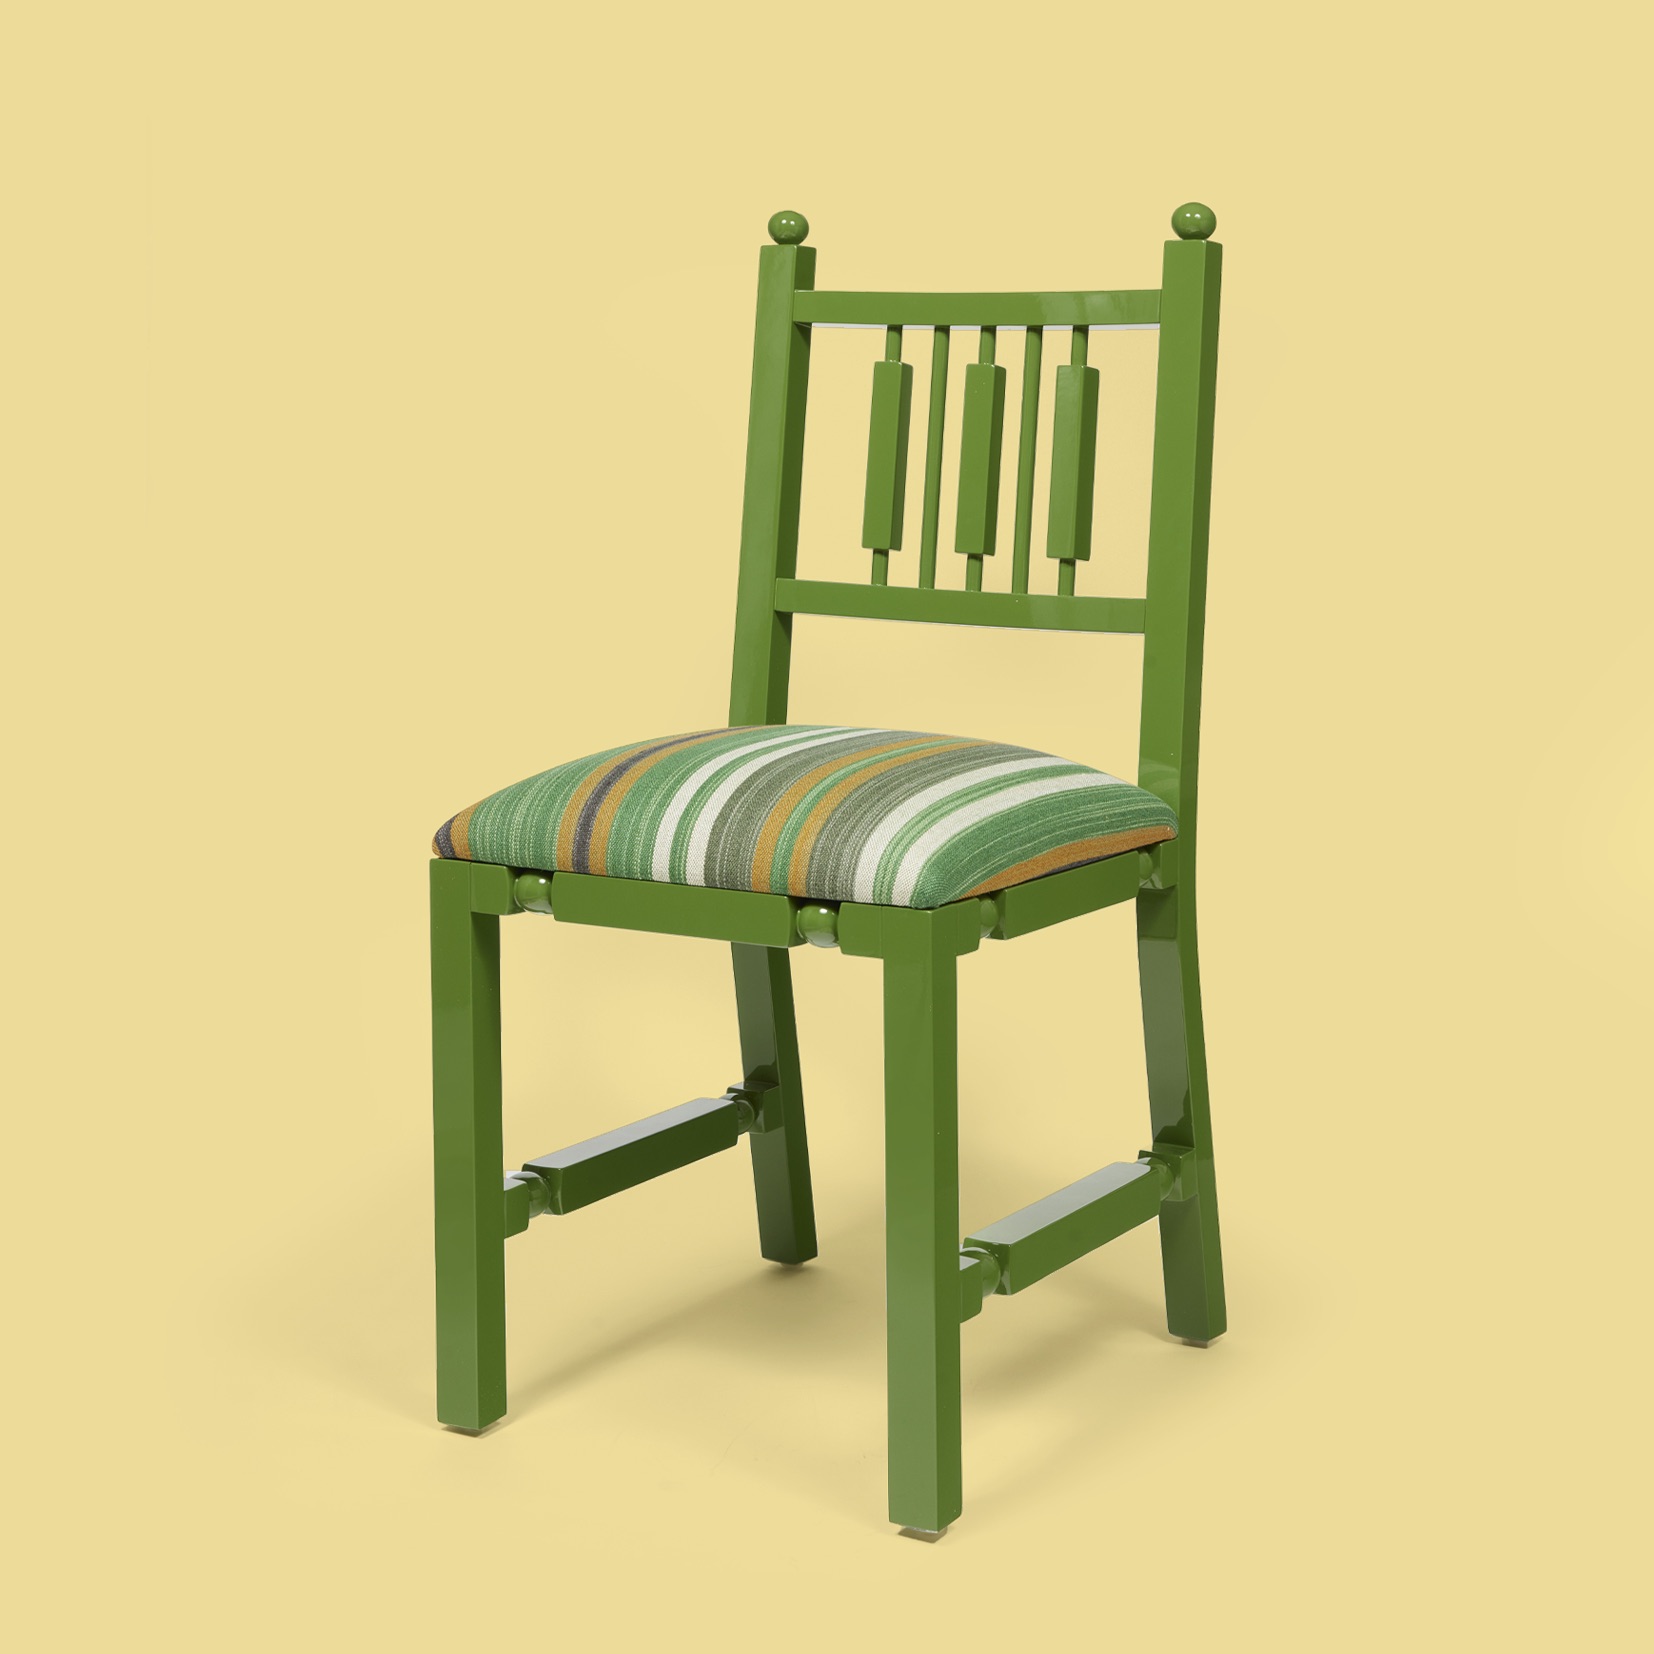 Pondichery chair green